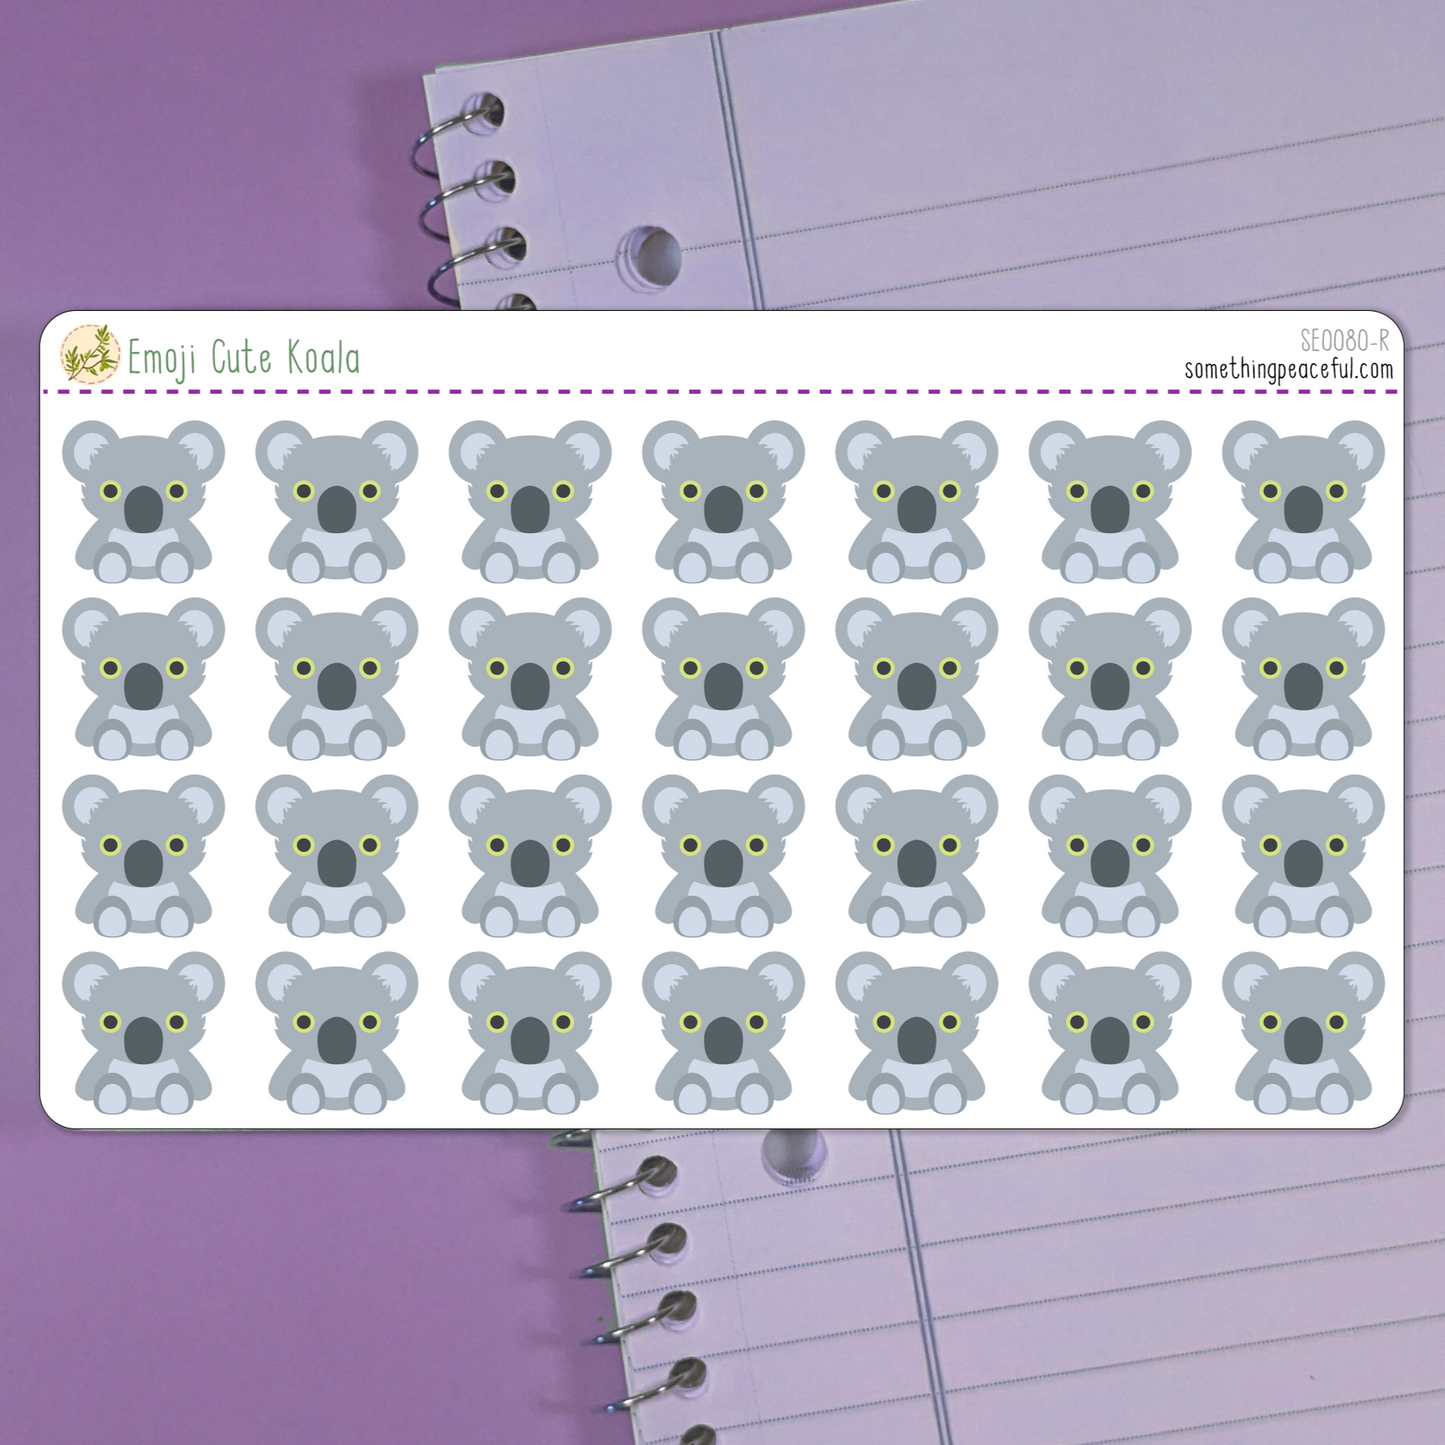 Cute Koala Emoji Sticker Sheet